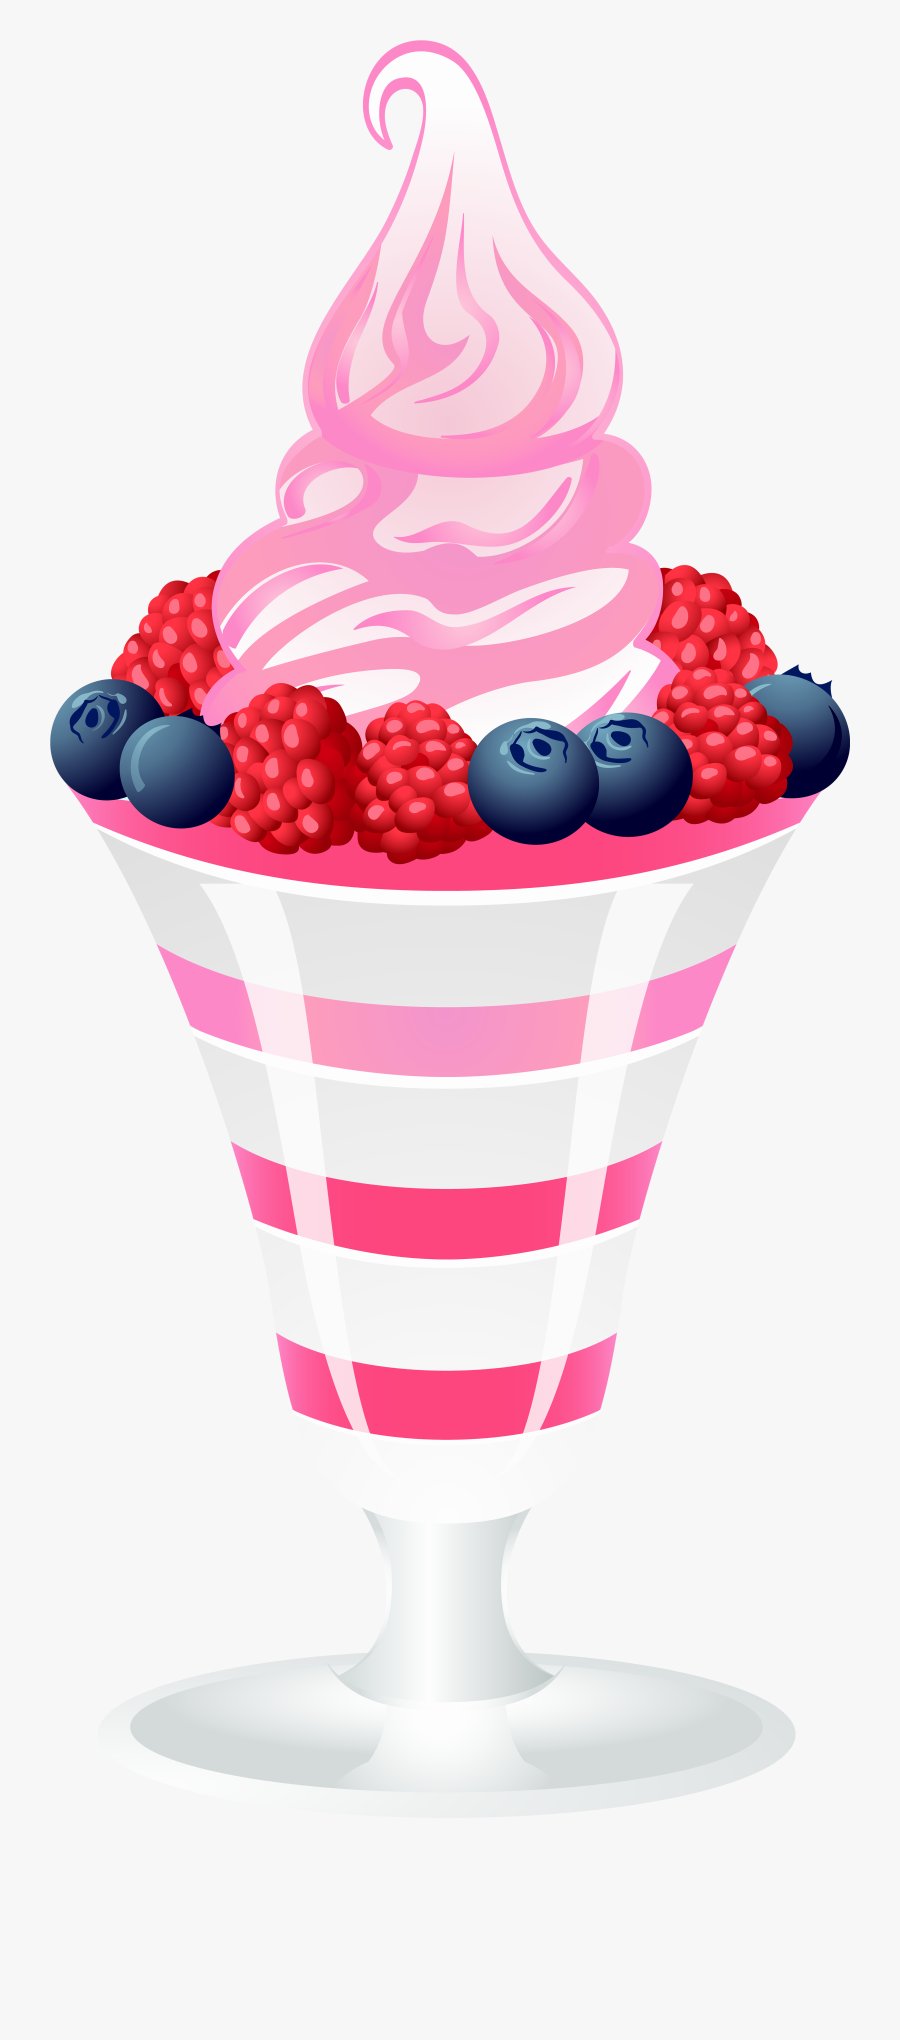 Ice Cream Sundae With Raspberries And Blackberries - Raspberry Ice Cream Png, Transparent Clipart